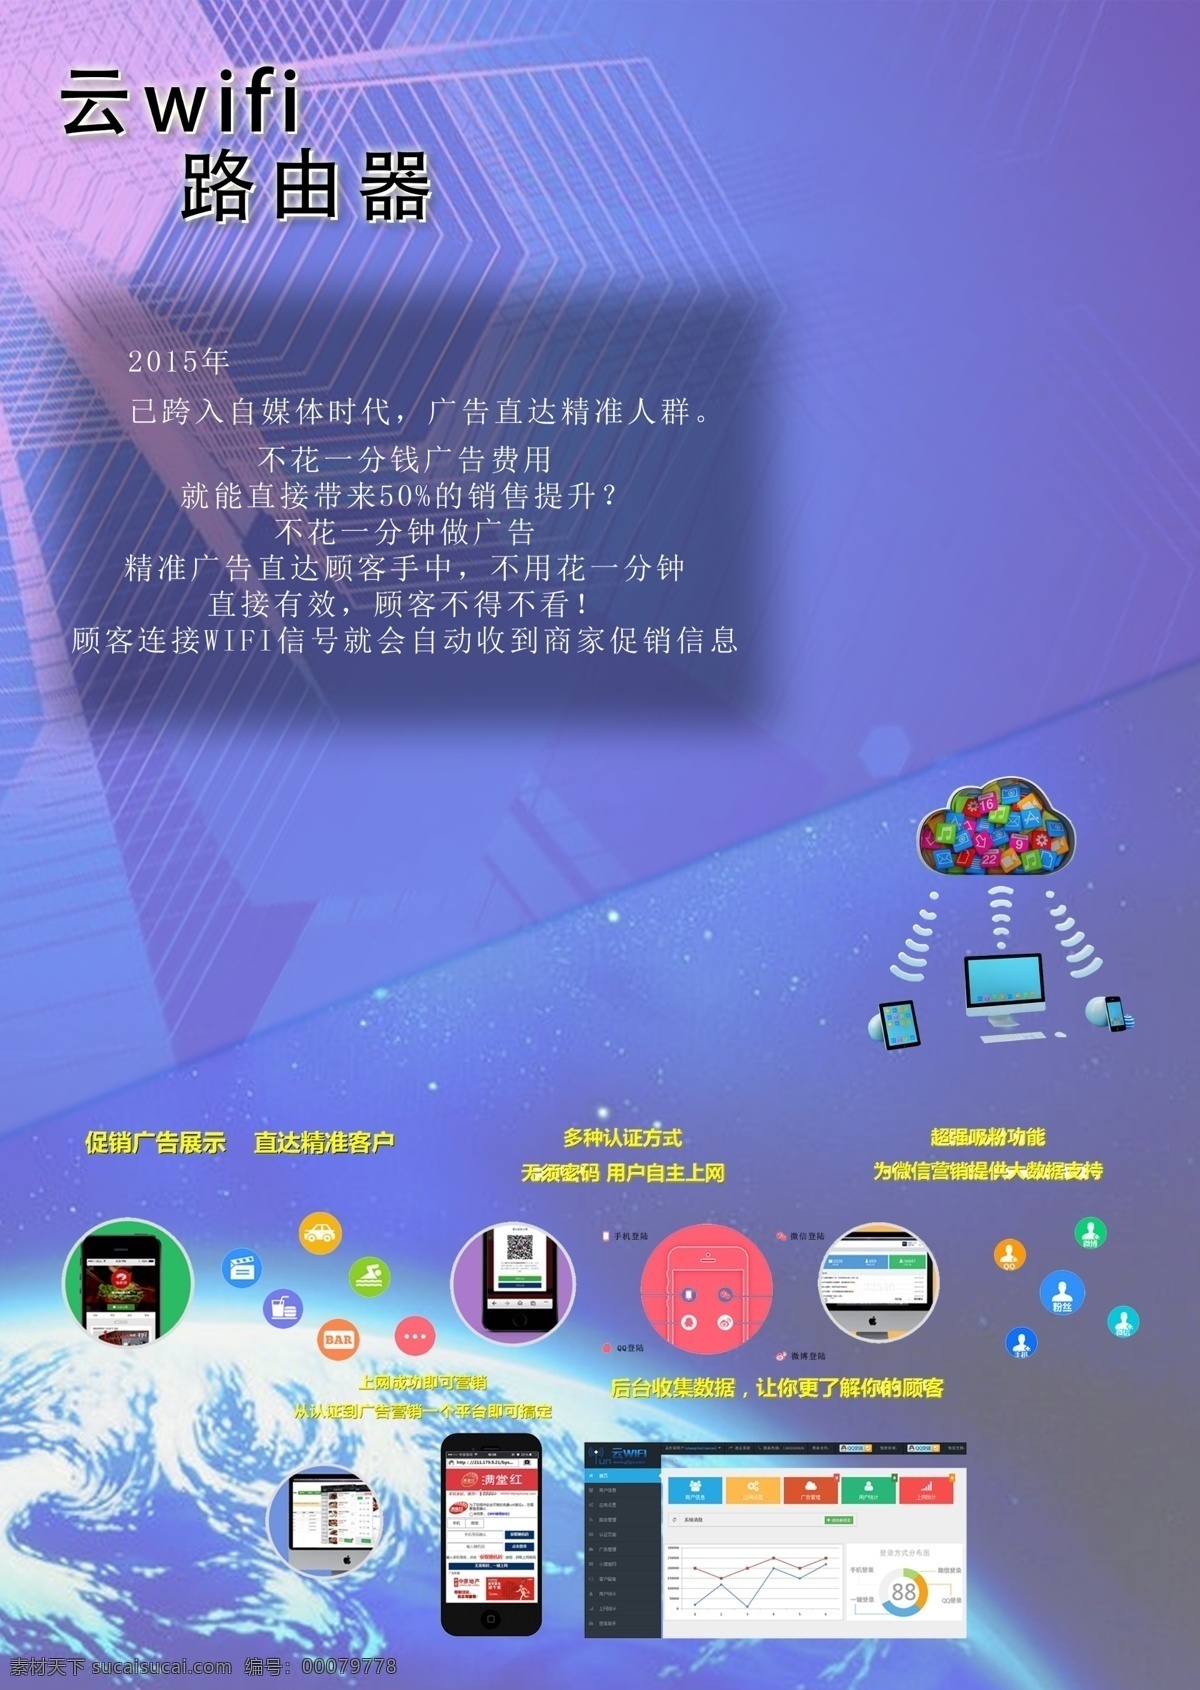 wifi 宣传单 紫 蓝色 背景 原创设计 紫蓝色背景 其他原创设计